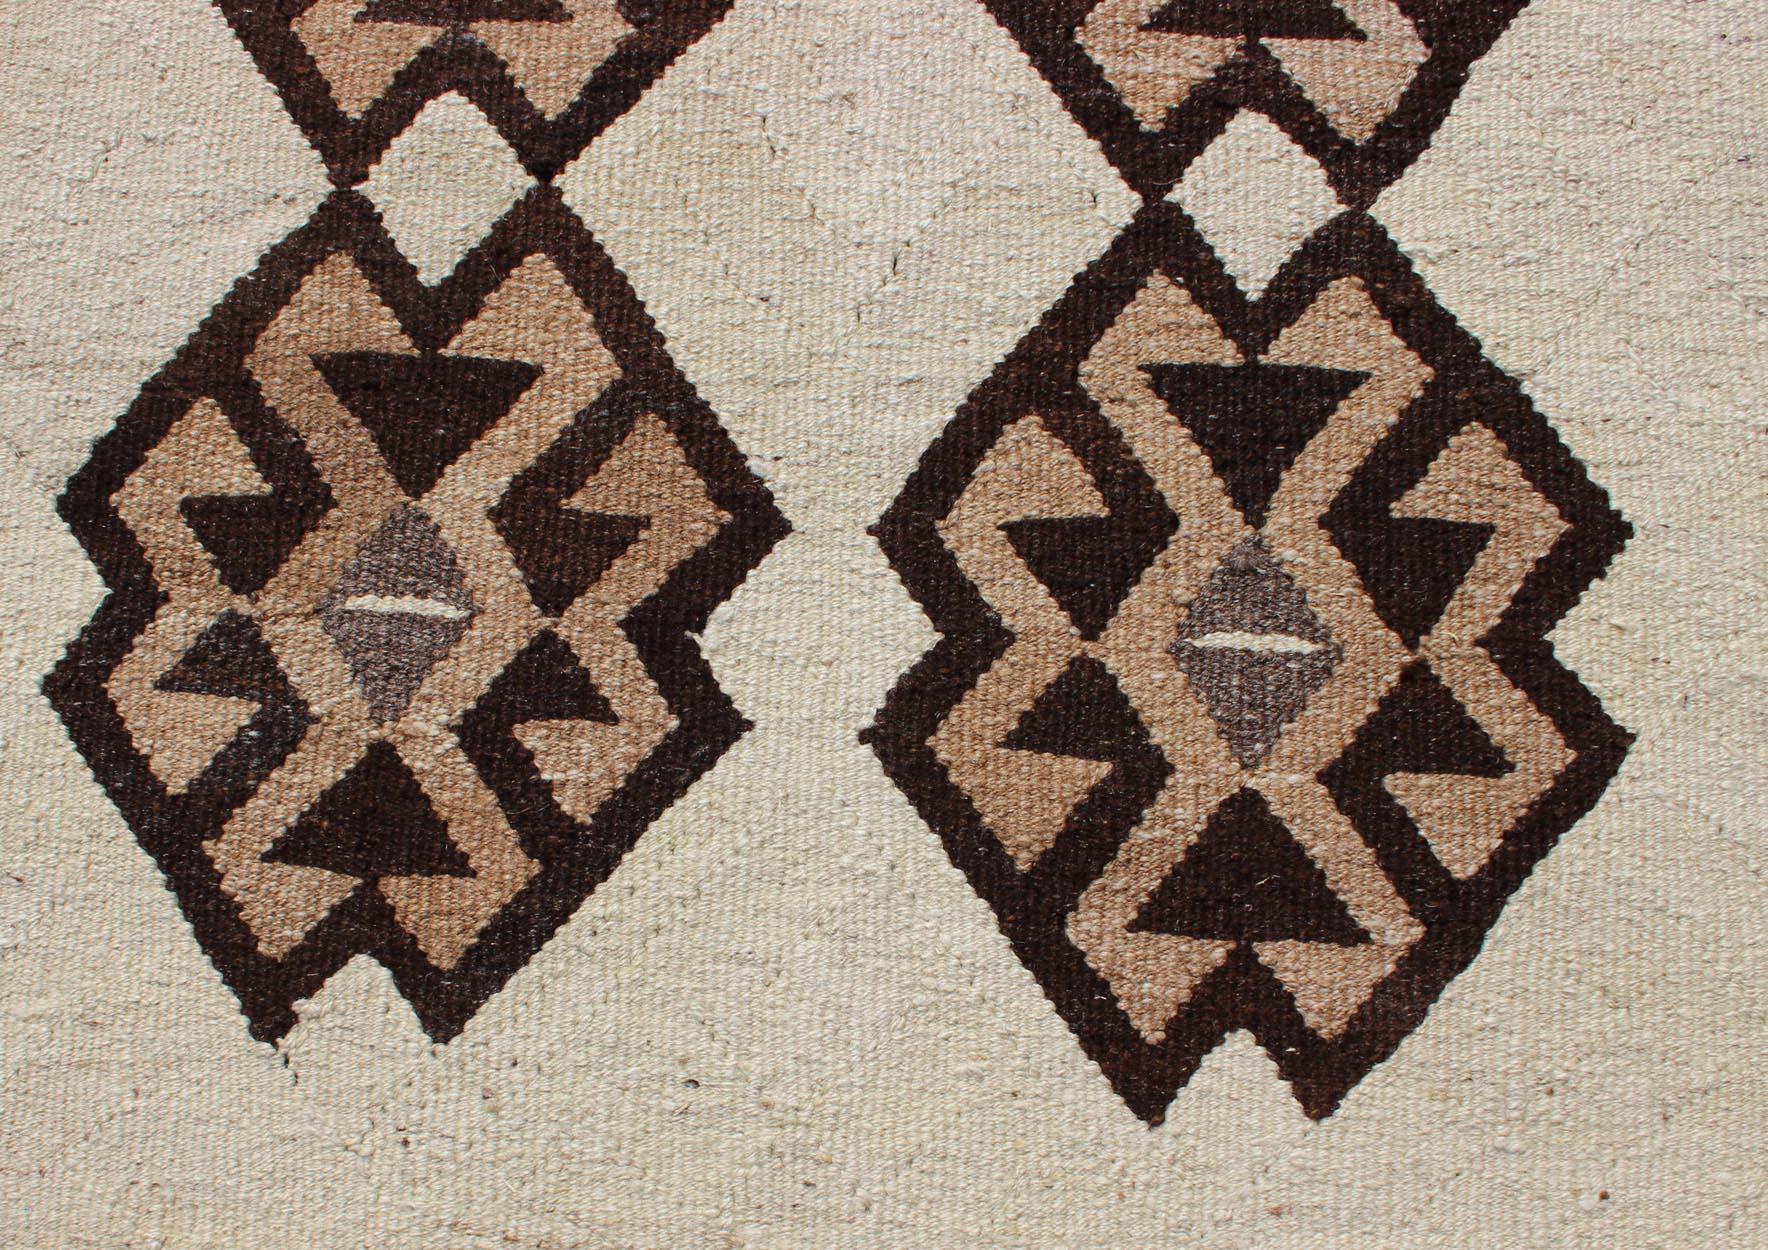 Wool Tribal Vintage Turkish Kilim in Creams, Black, and Browns For Sale